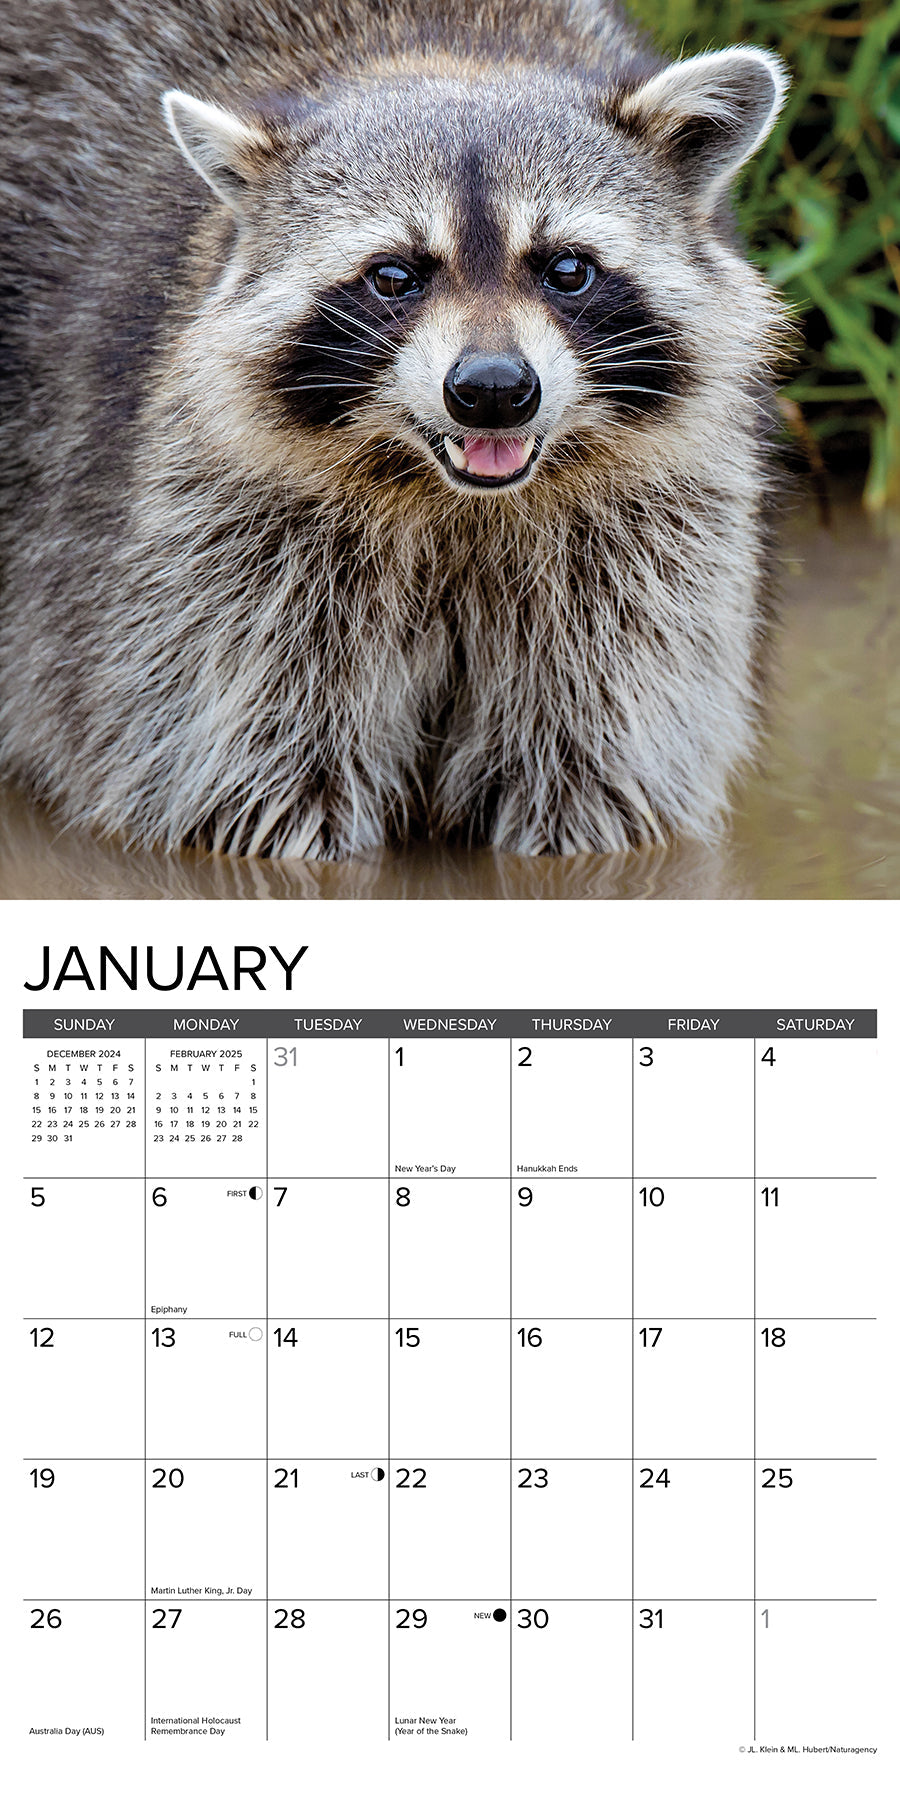 2025 Rascally Raccoons - Square Wall Calendar